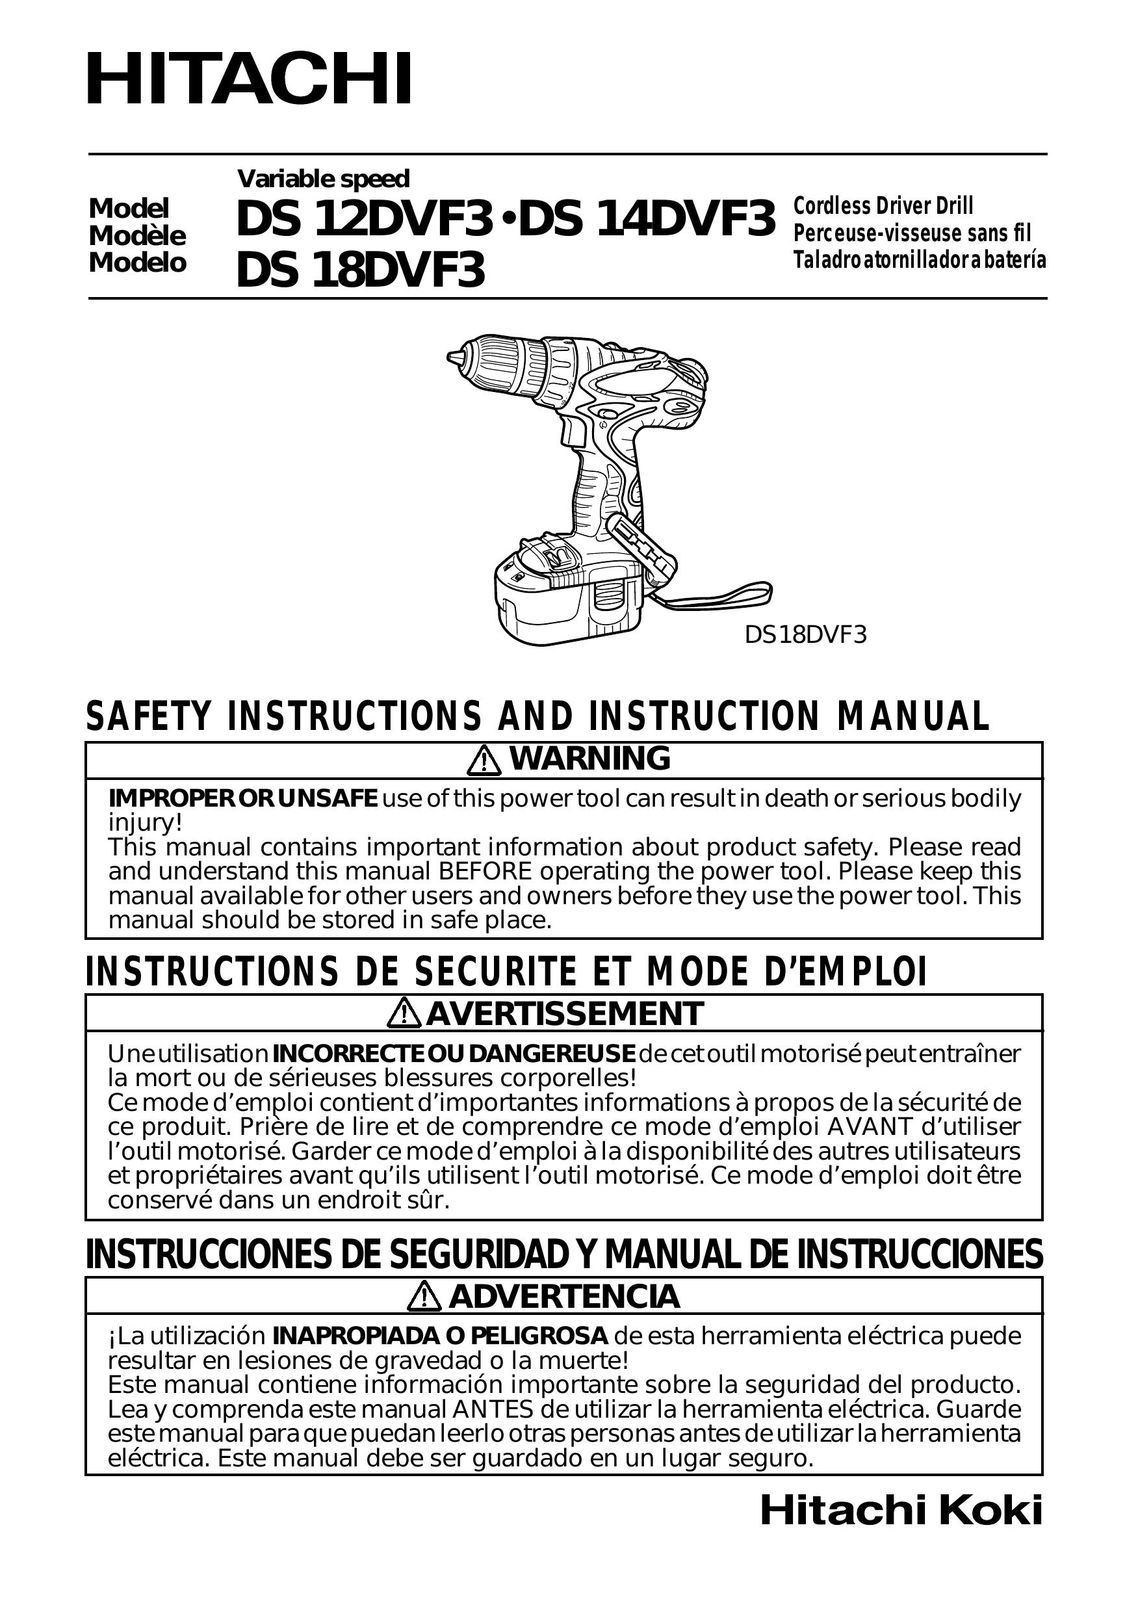 Hitachi DS 12DVF3 Cordless Drill User Manual